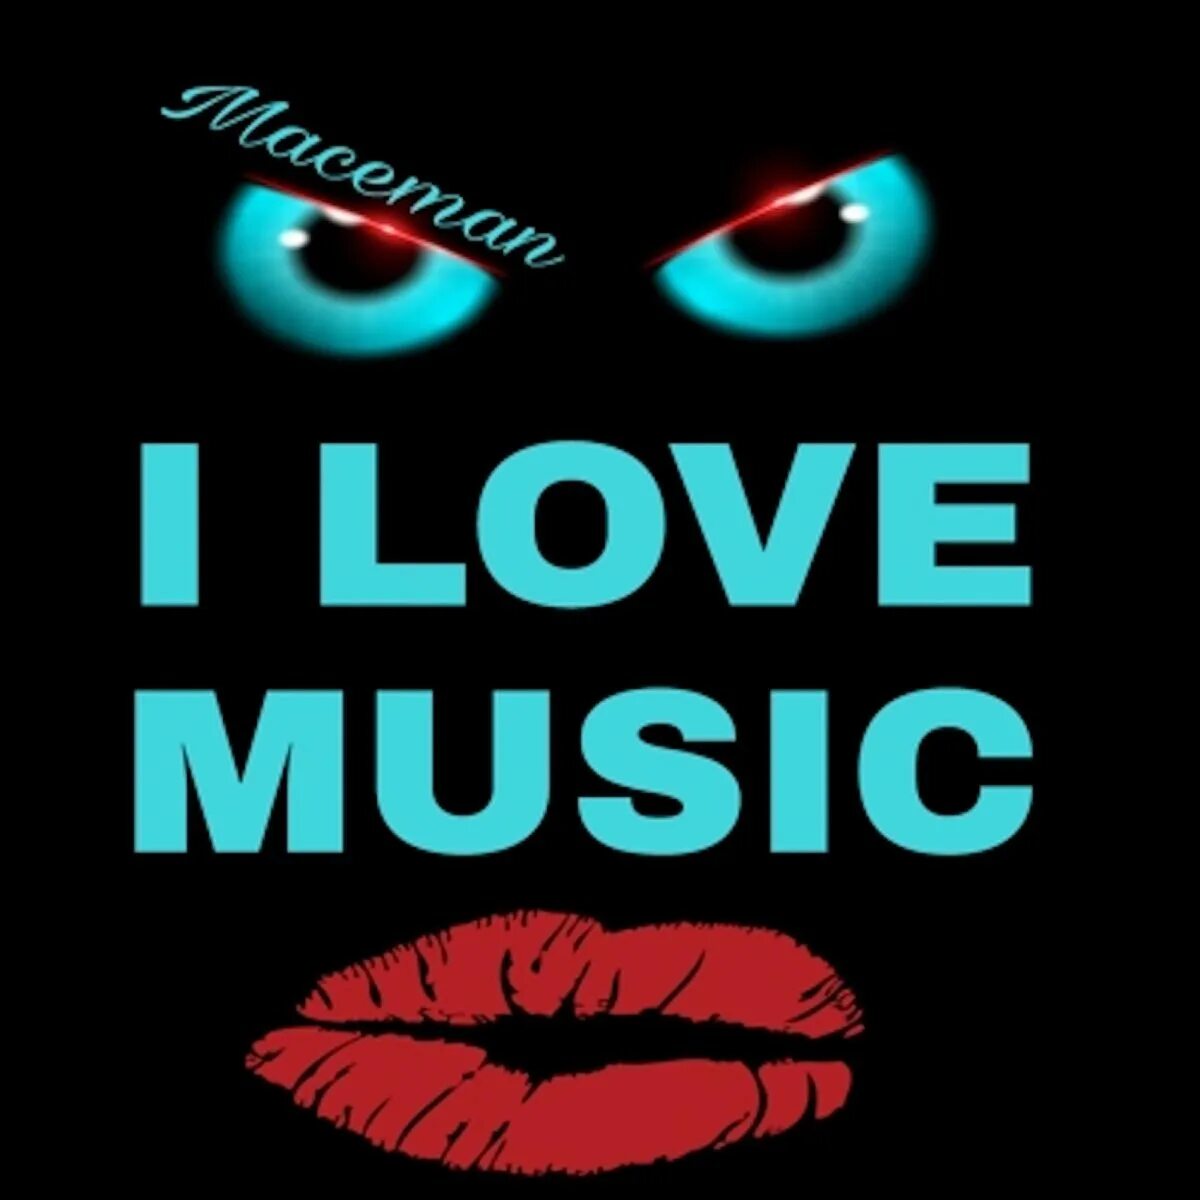 Love Music. I Love you Music. I Love музыку. Love you Music. I love music m